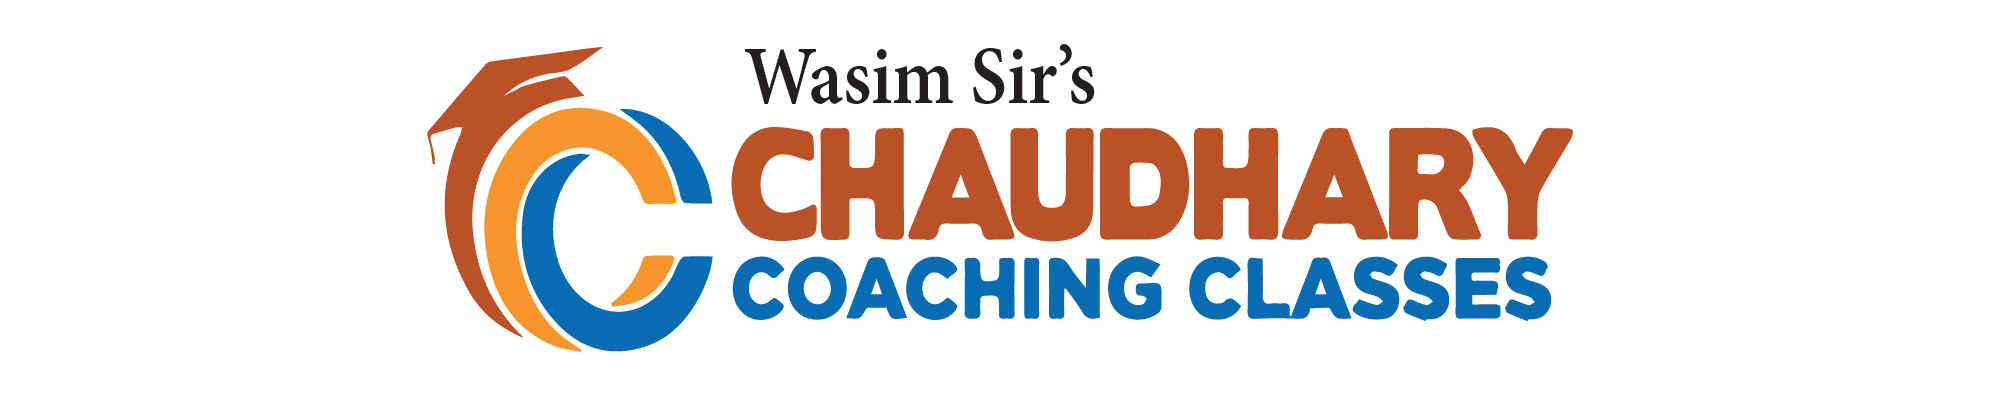 Wasim Sir's Chaudhary Coaching Classes|Coaching Institute|Education